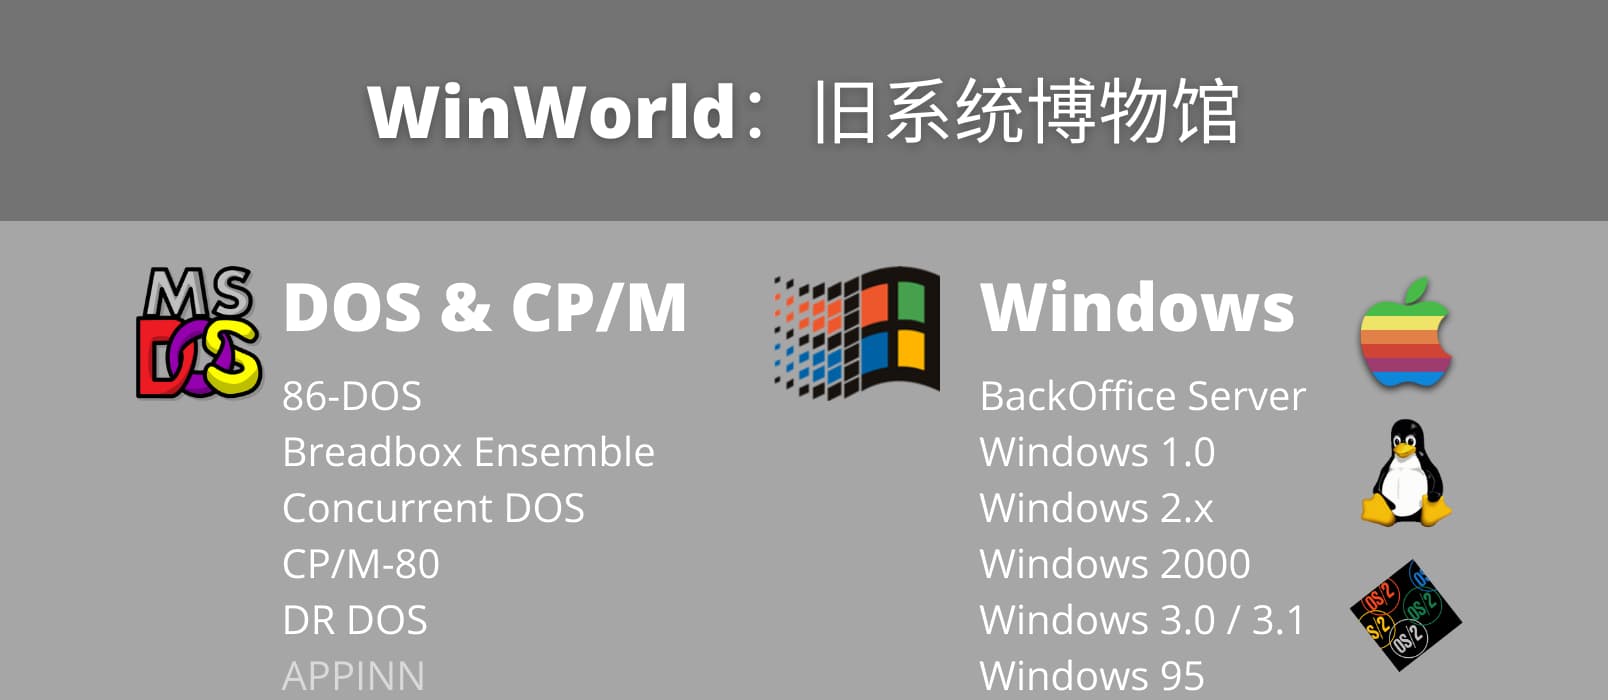 WinWorld - 从 DOS 到 Win 2000，旧系统博物馆，还有同样过时的海量软件、游戏